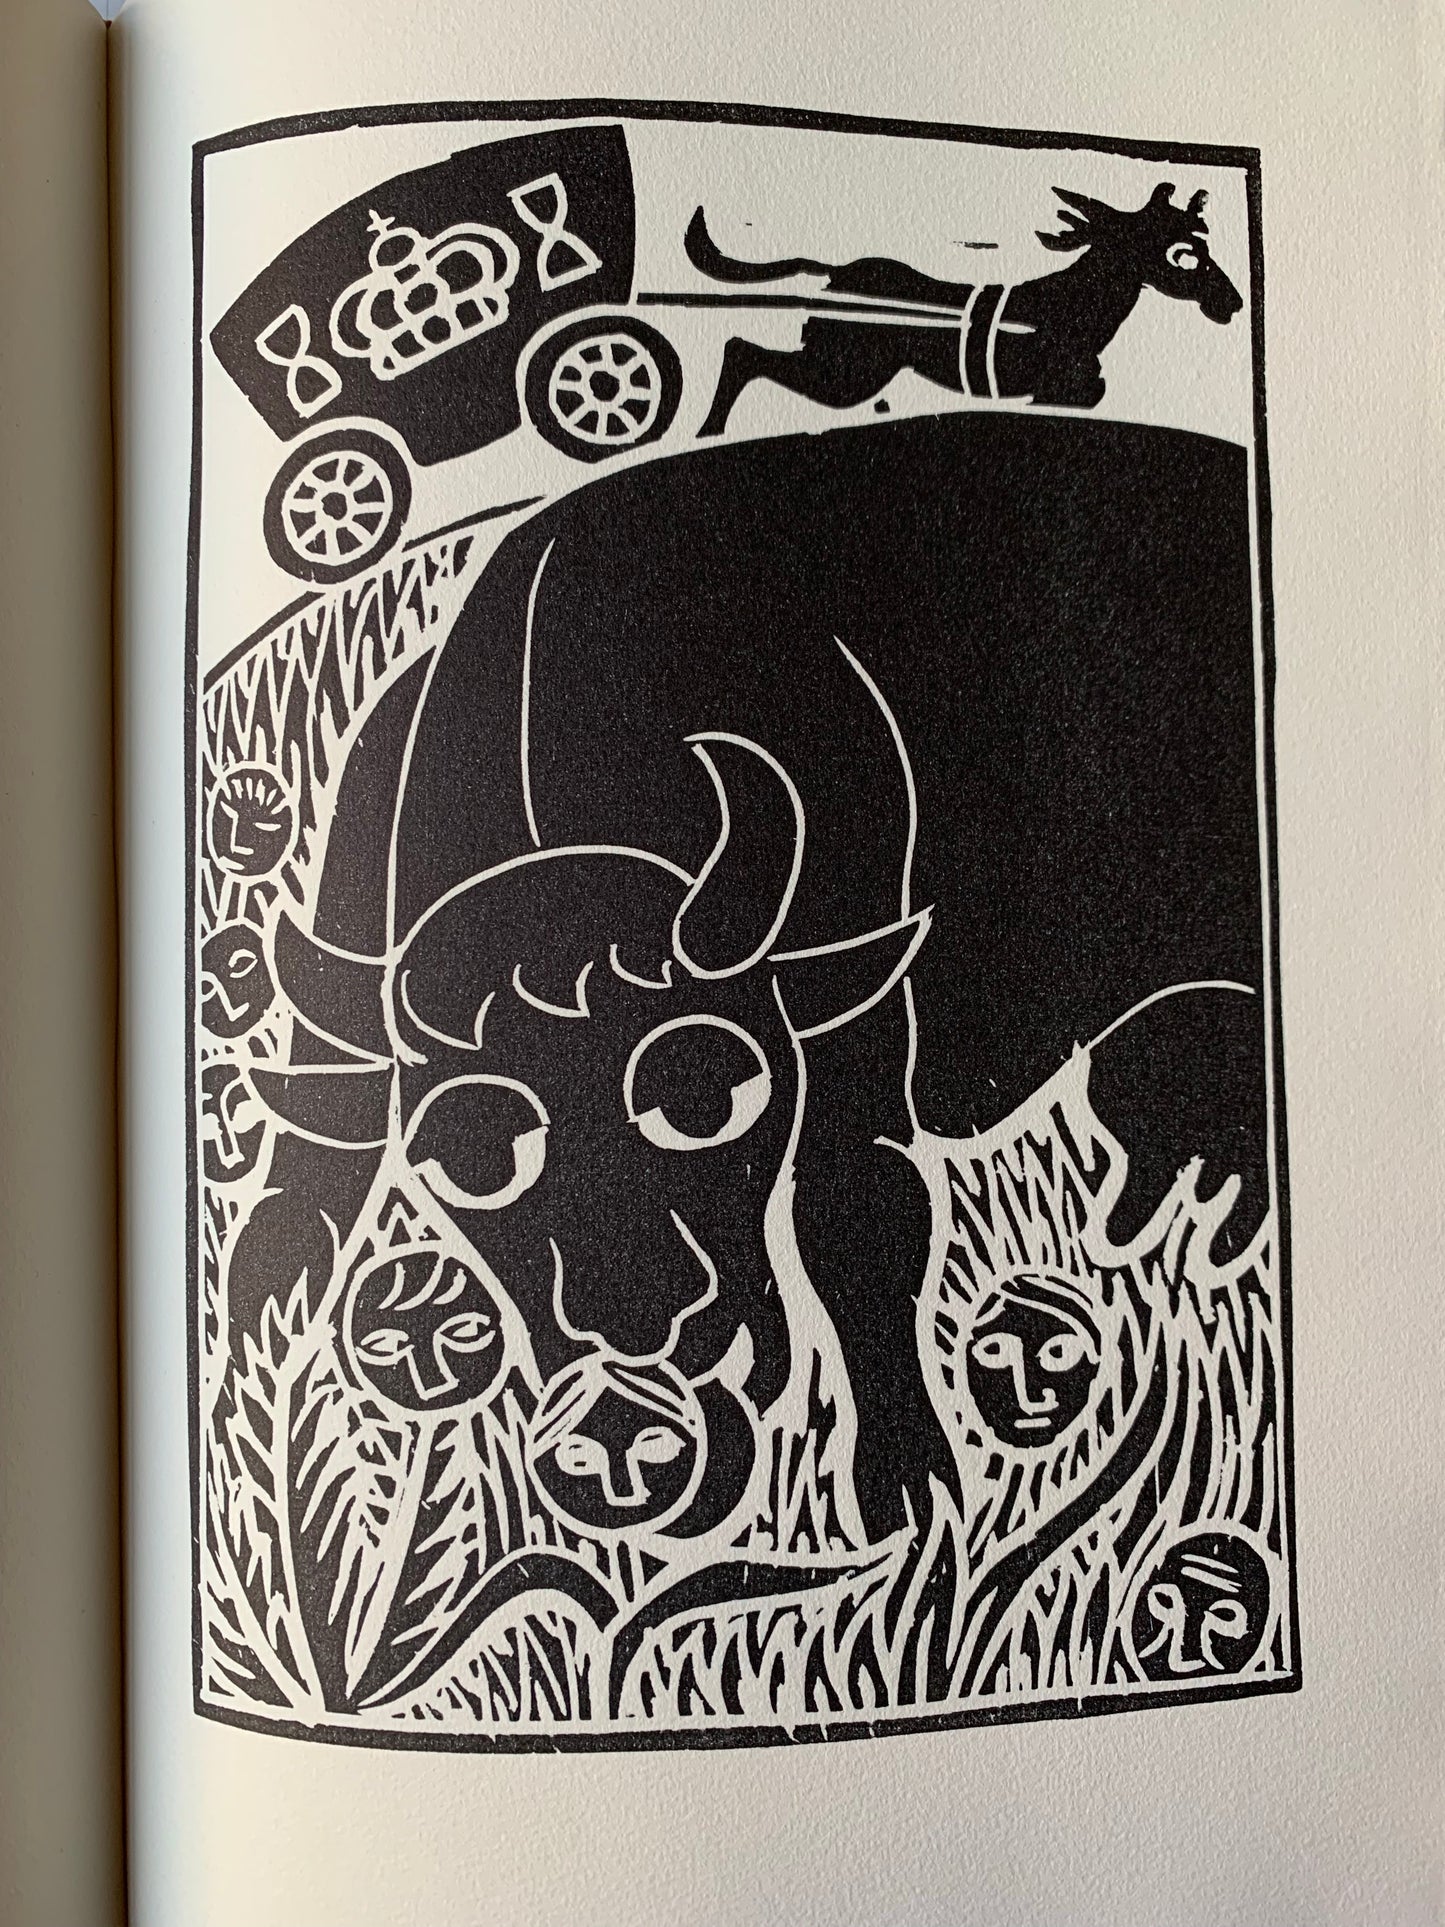 Jan Garff. "Modern Danish Graphics and Poetry", original prints by JF Willumsen ao, 1960